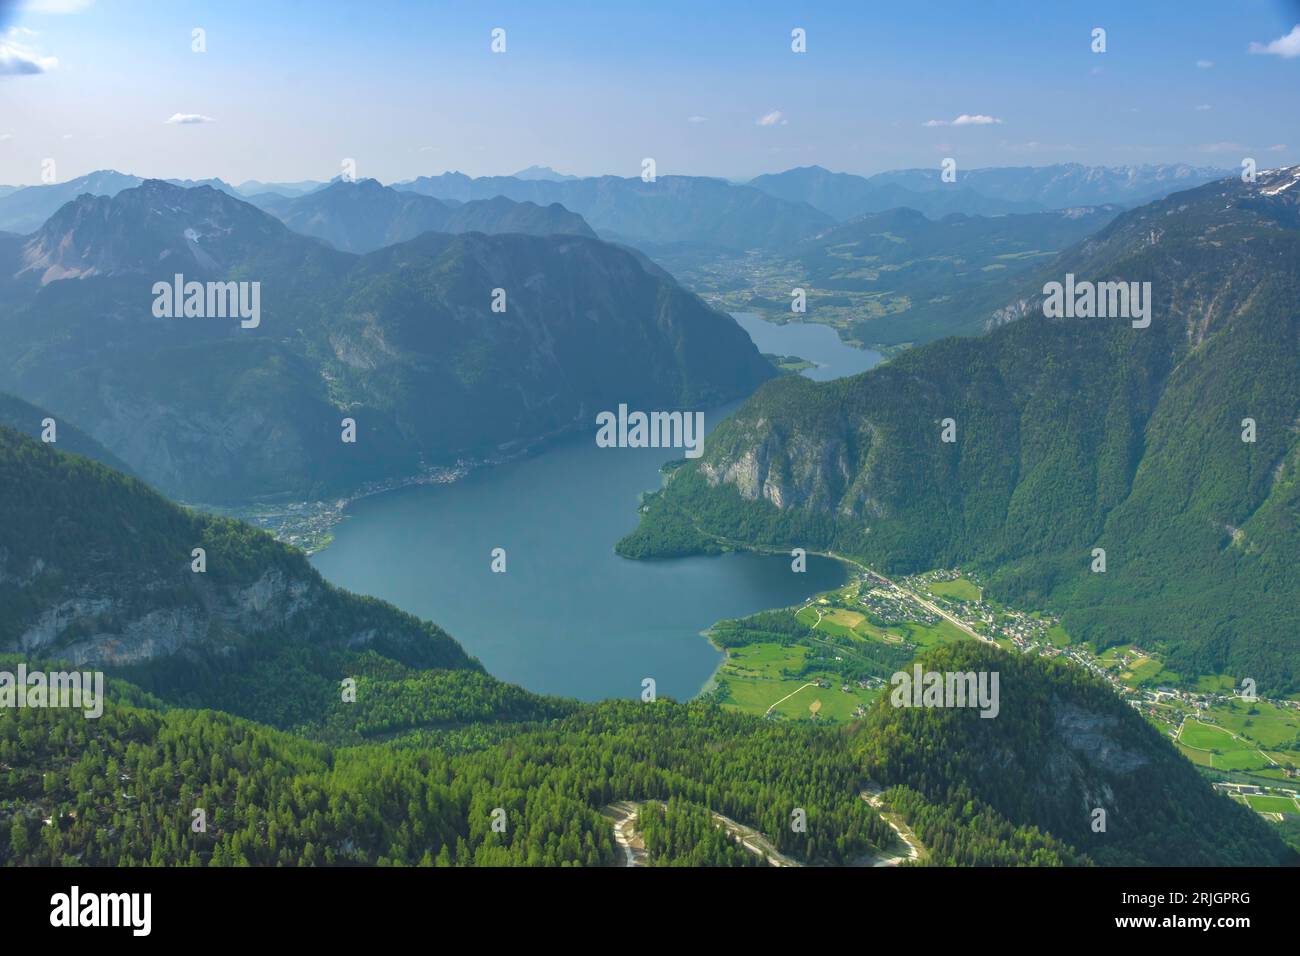 Amazing panorama from '5 Fingers' viewing platform above Hallstatt village, Hallstättersee lake and the inner Salzkammergut region, Austria Stock Photo